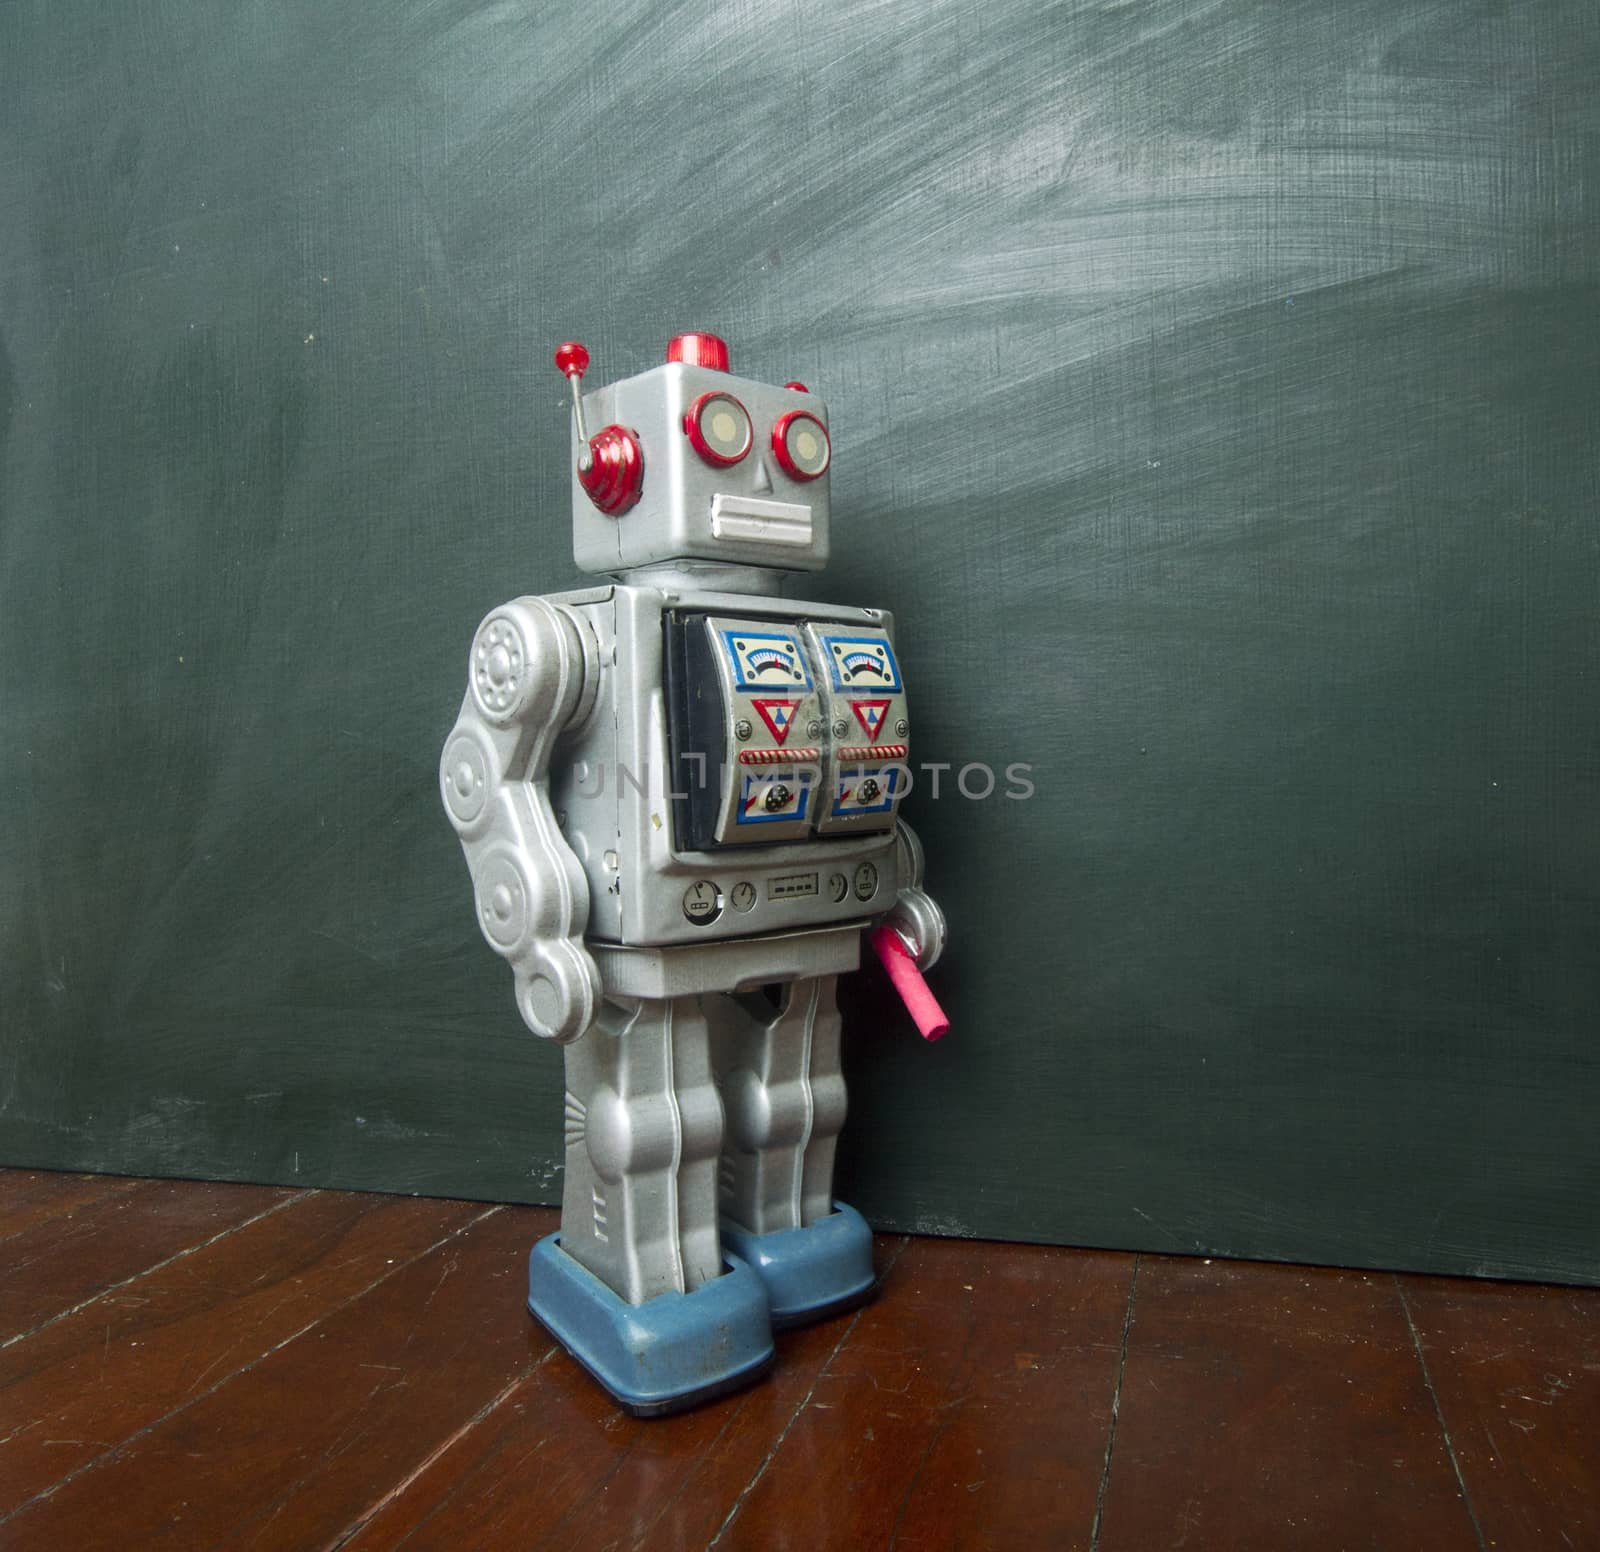 robots chalk by davincidig